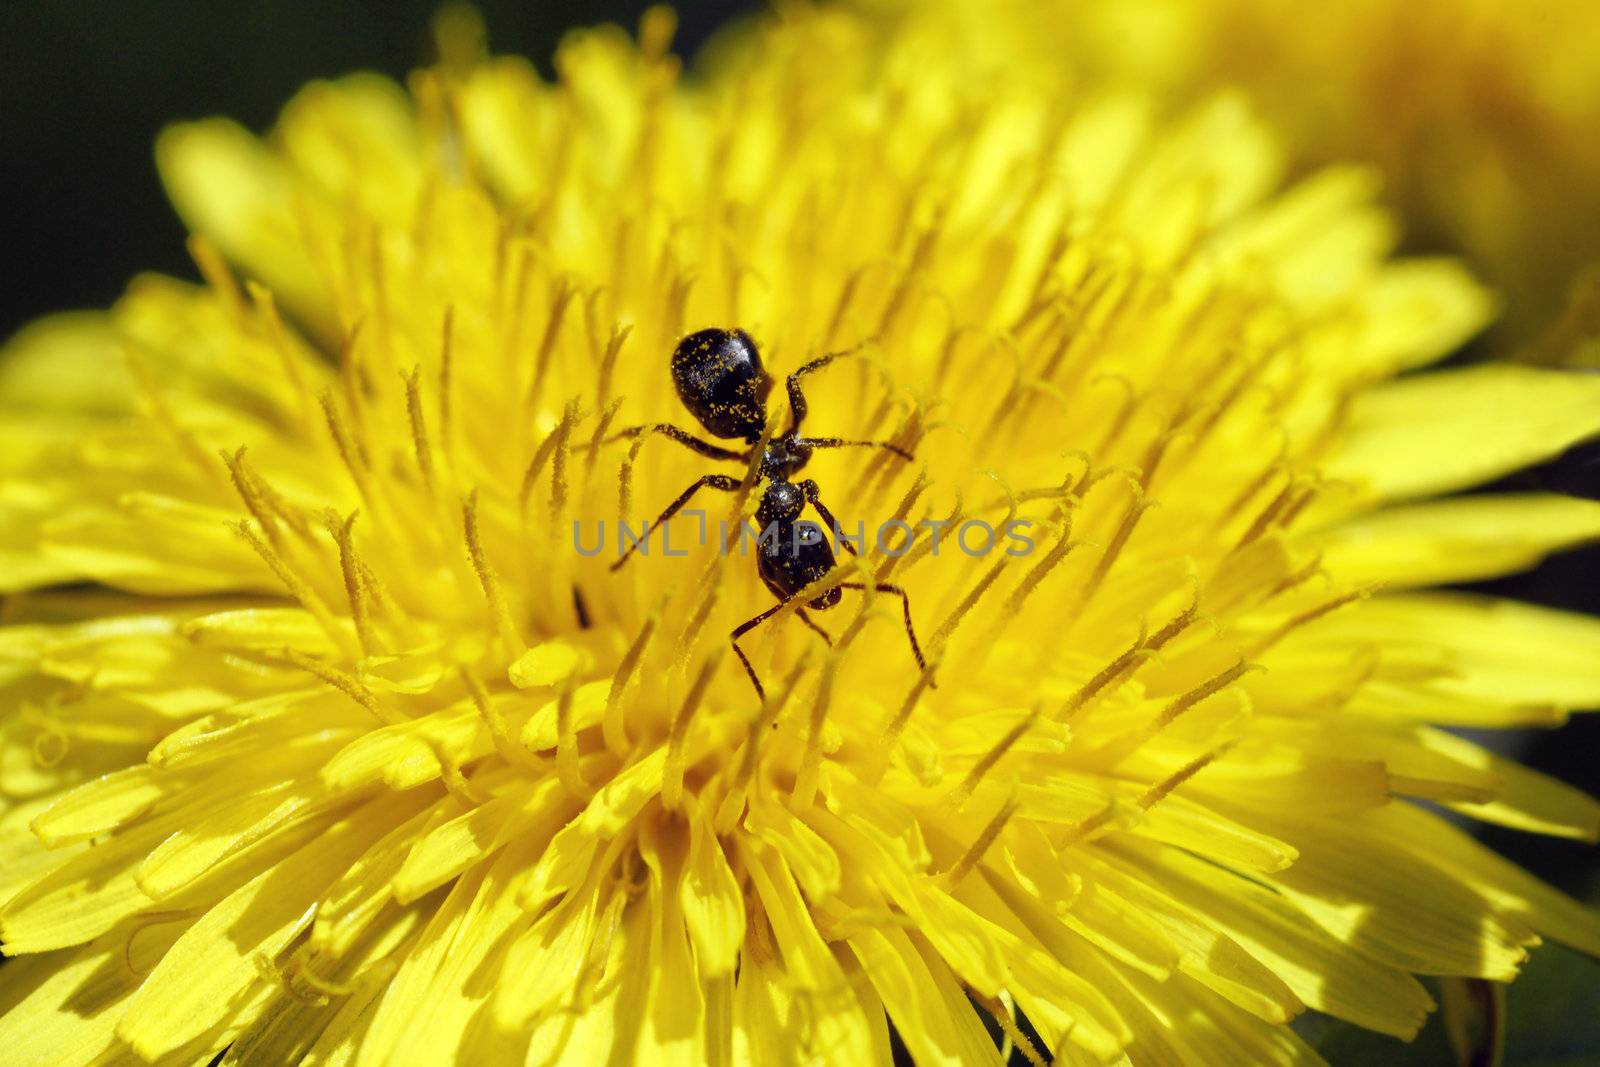 Ant feeding in dendelion flower by Mirage3